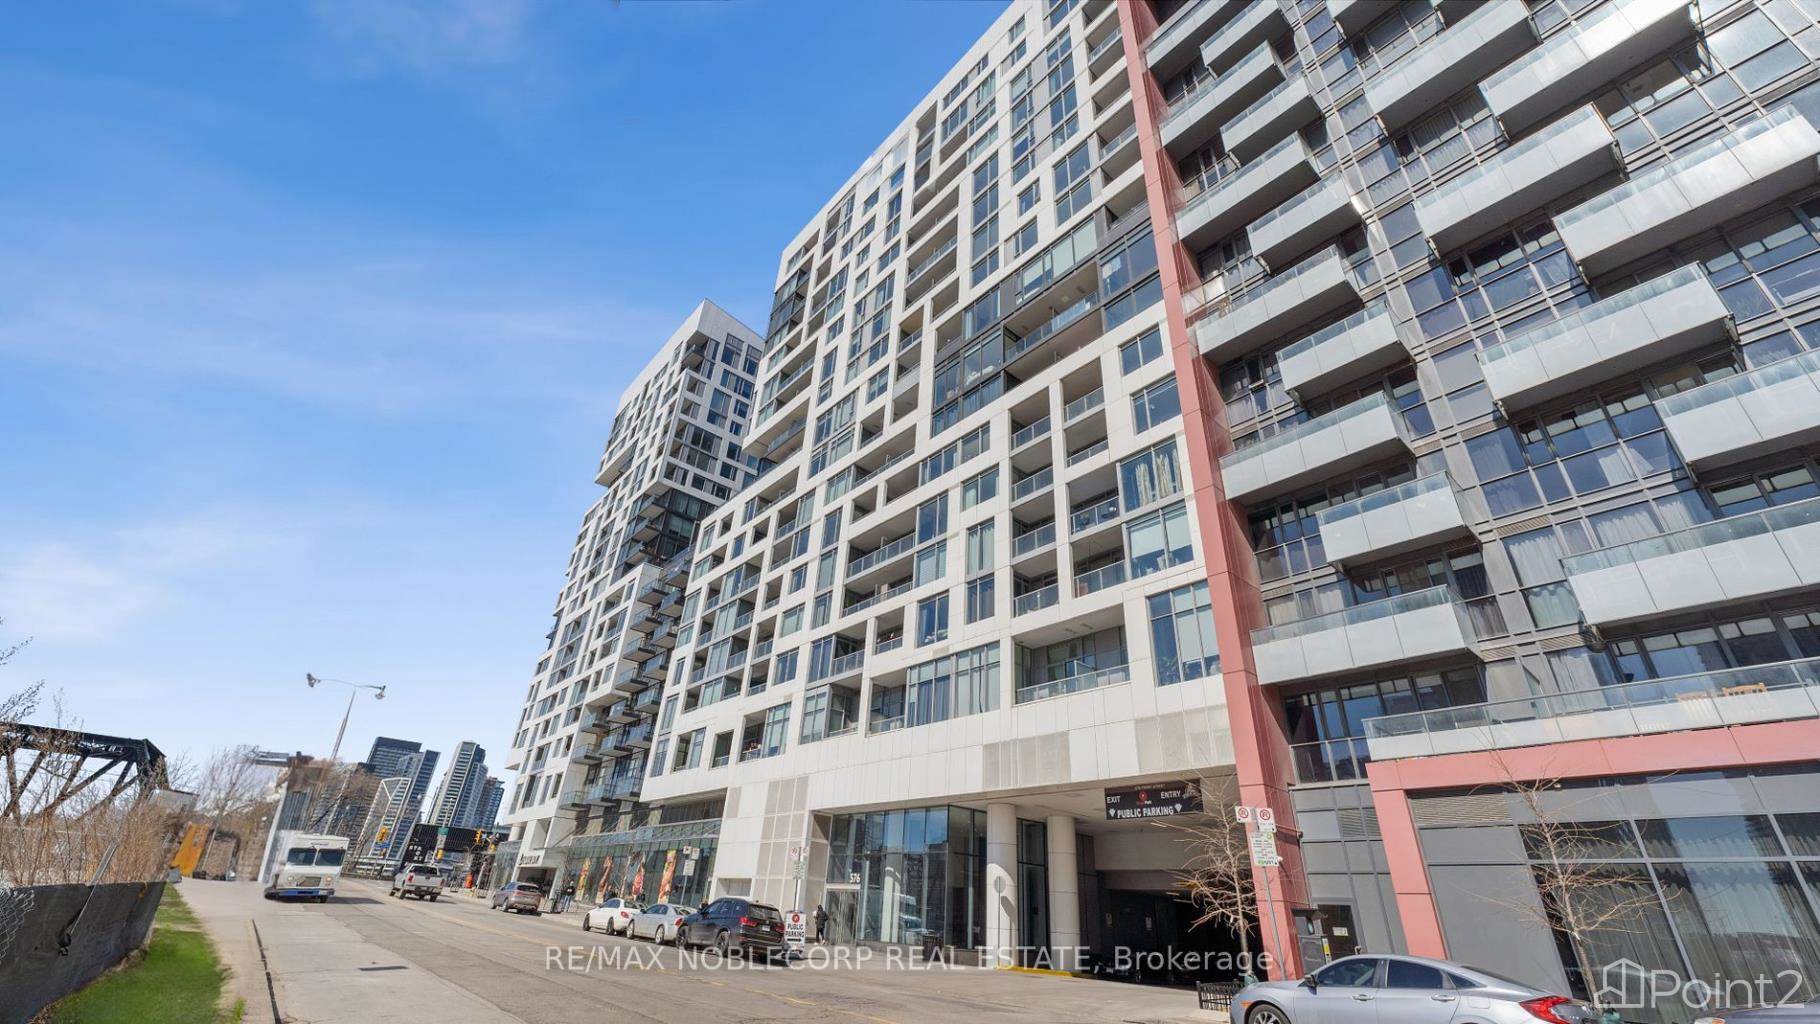 Residential Home For Sale |  | Toronto | M5V1C1